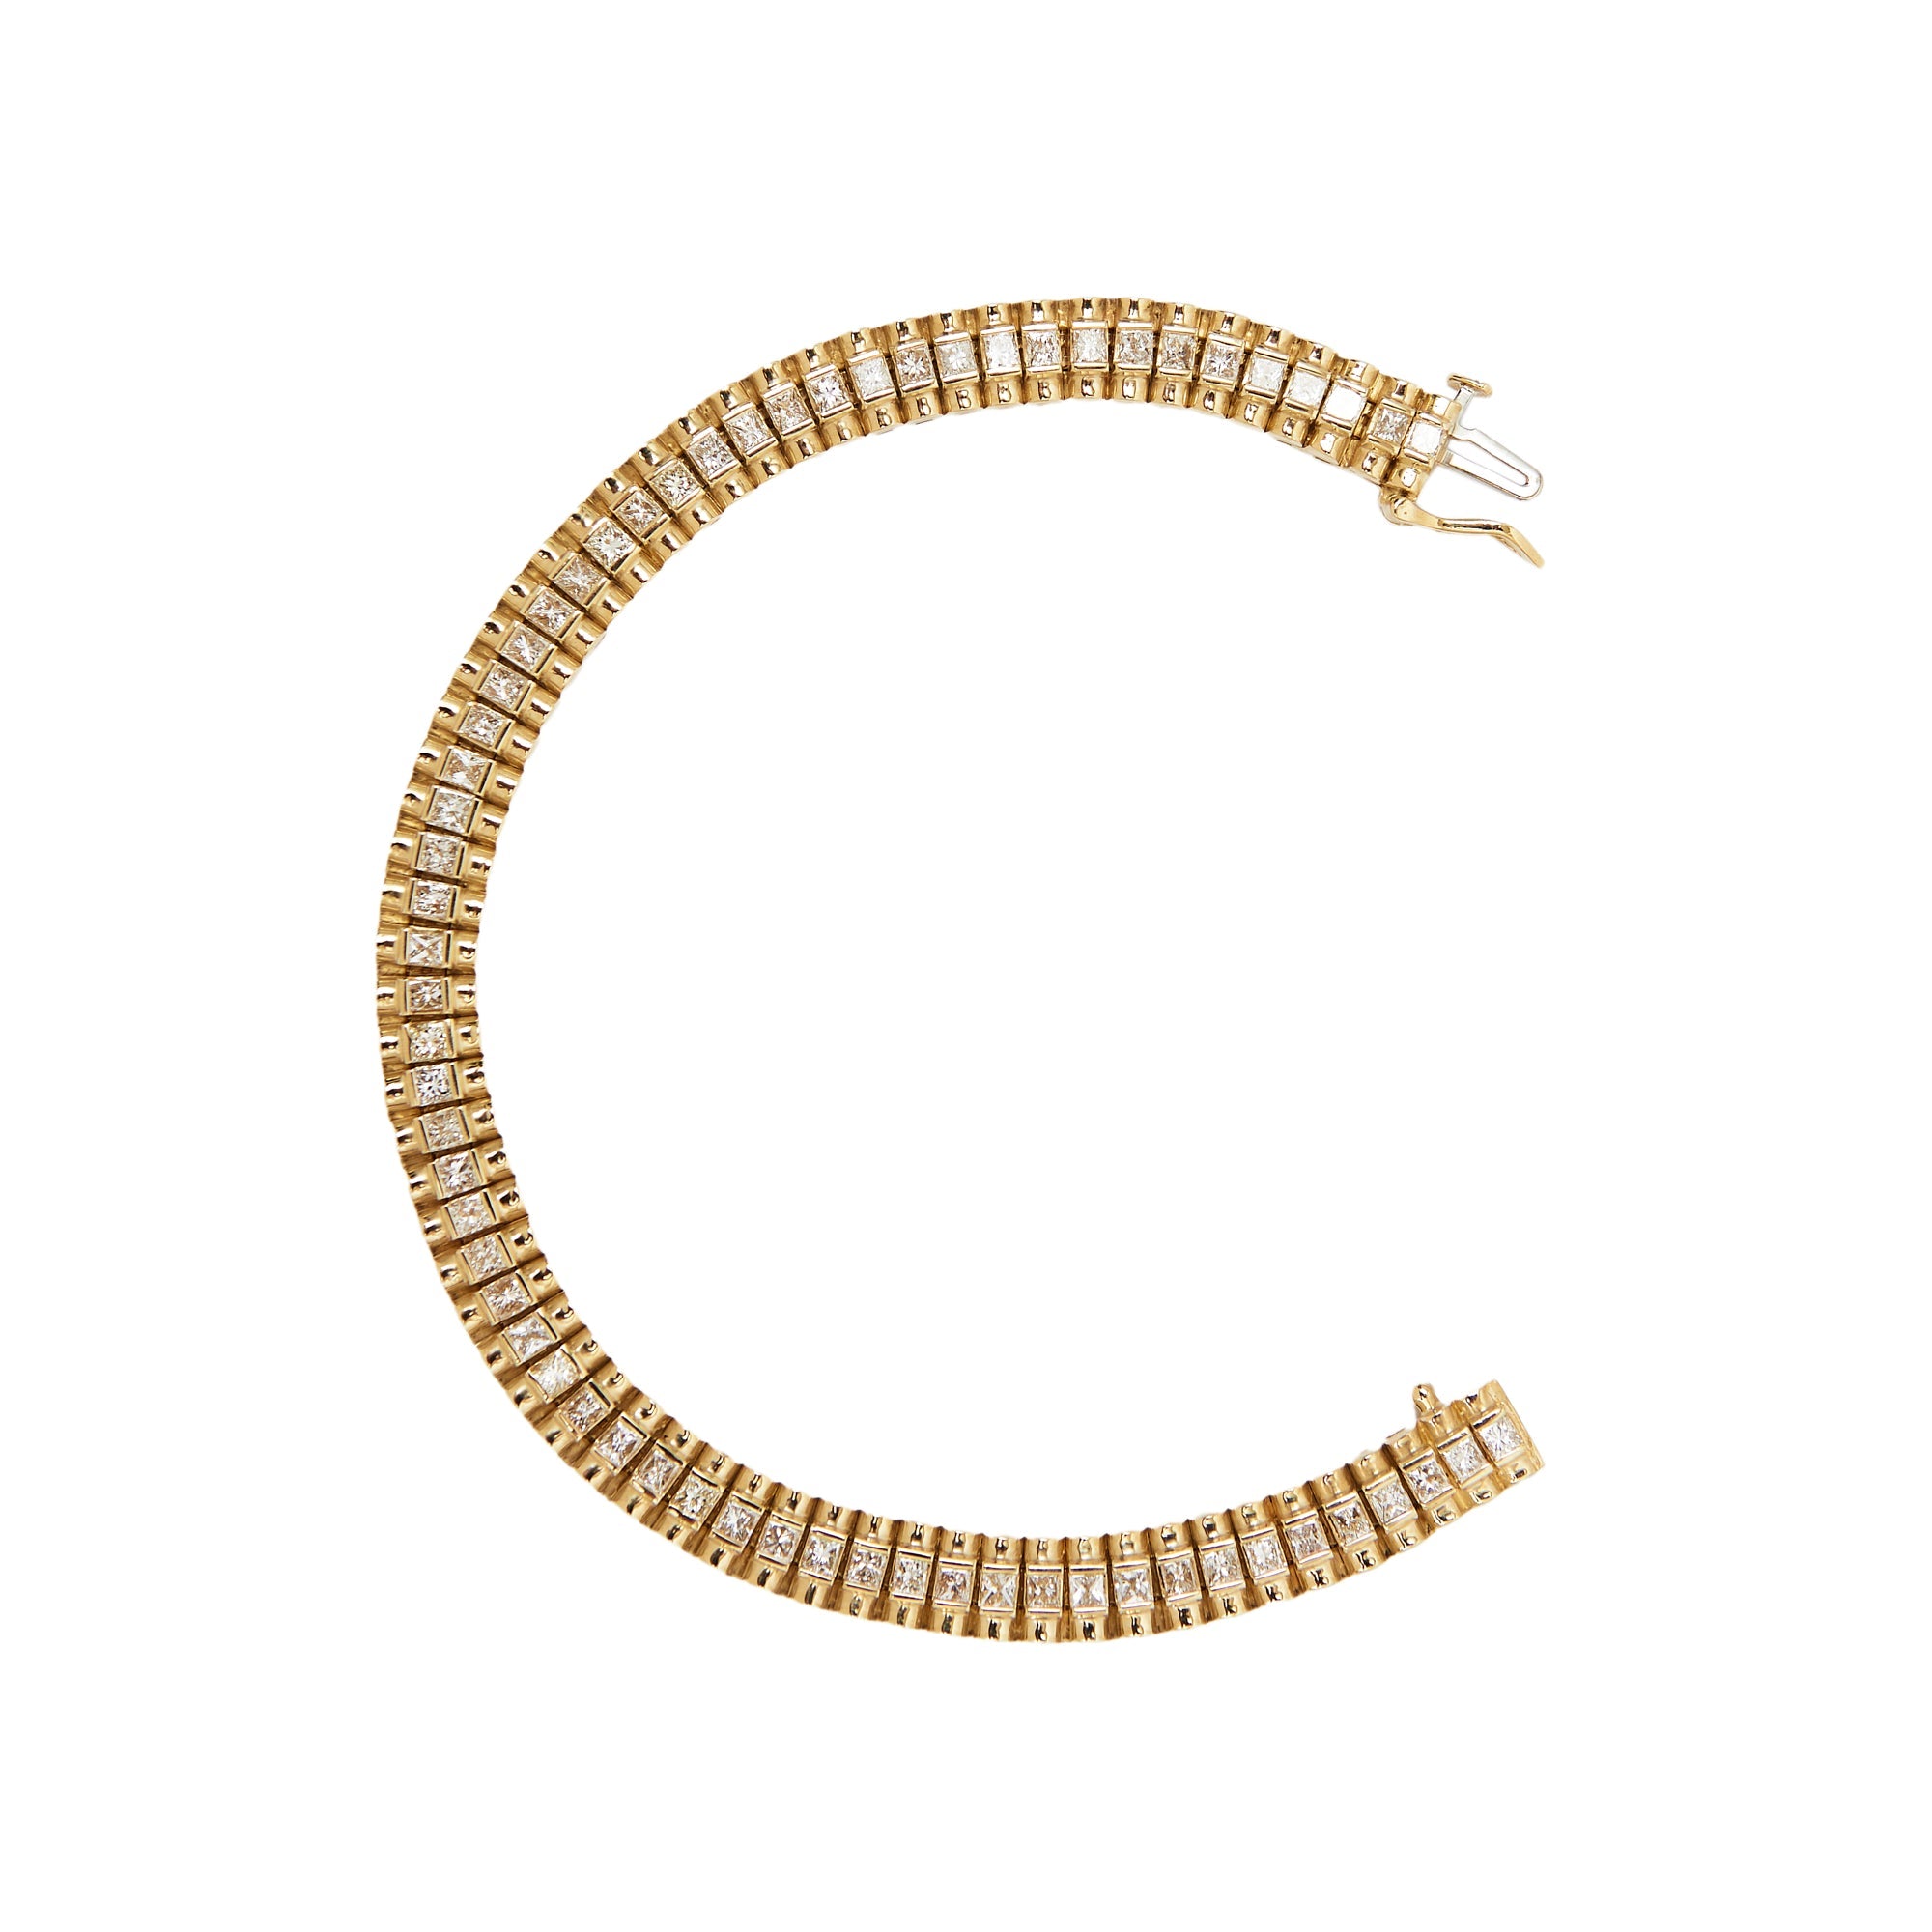 Pre-Owned 14ct Gold Diamond Set 3 Row Bracelet